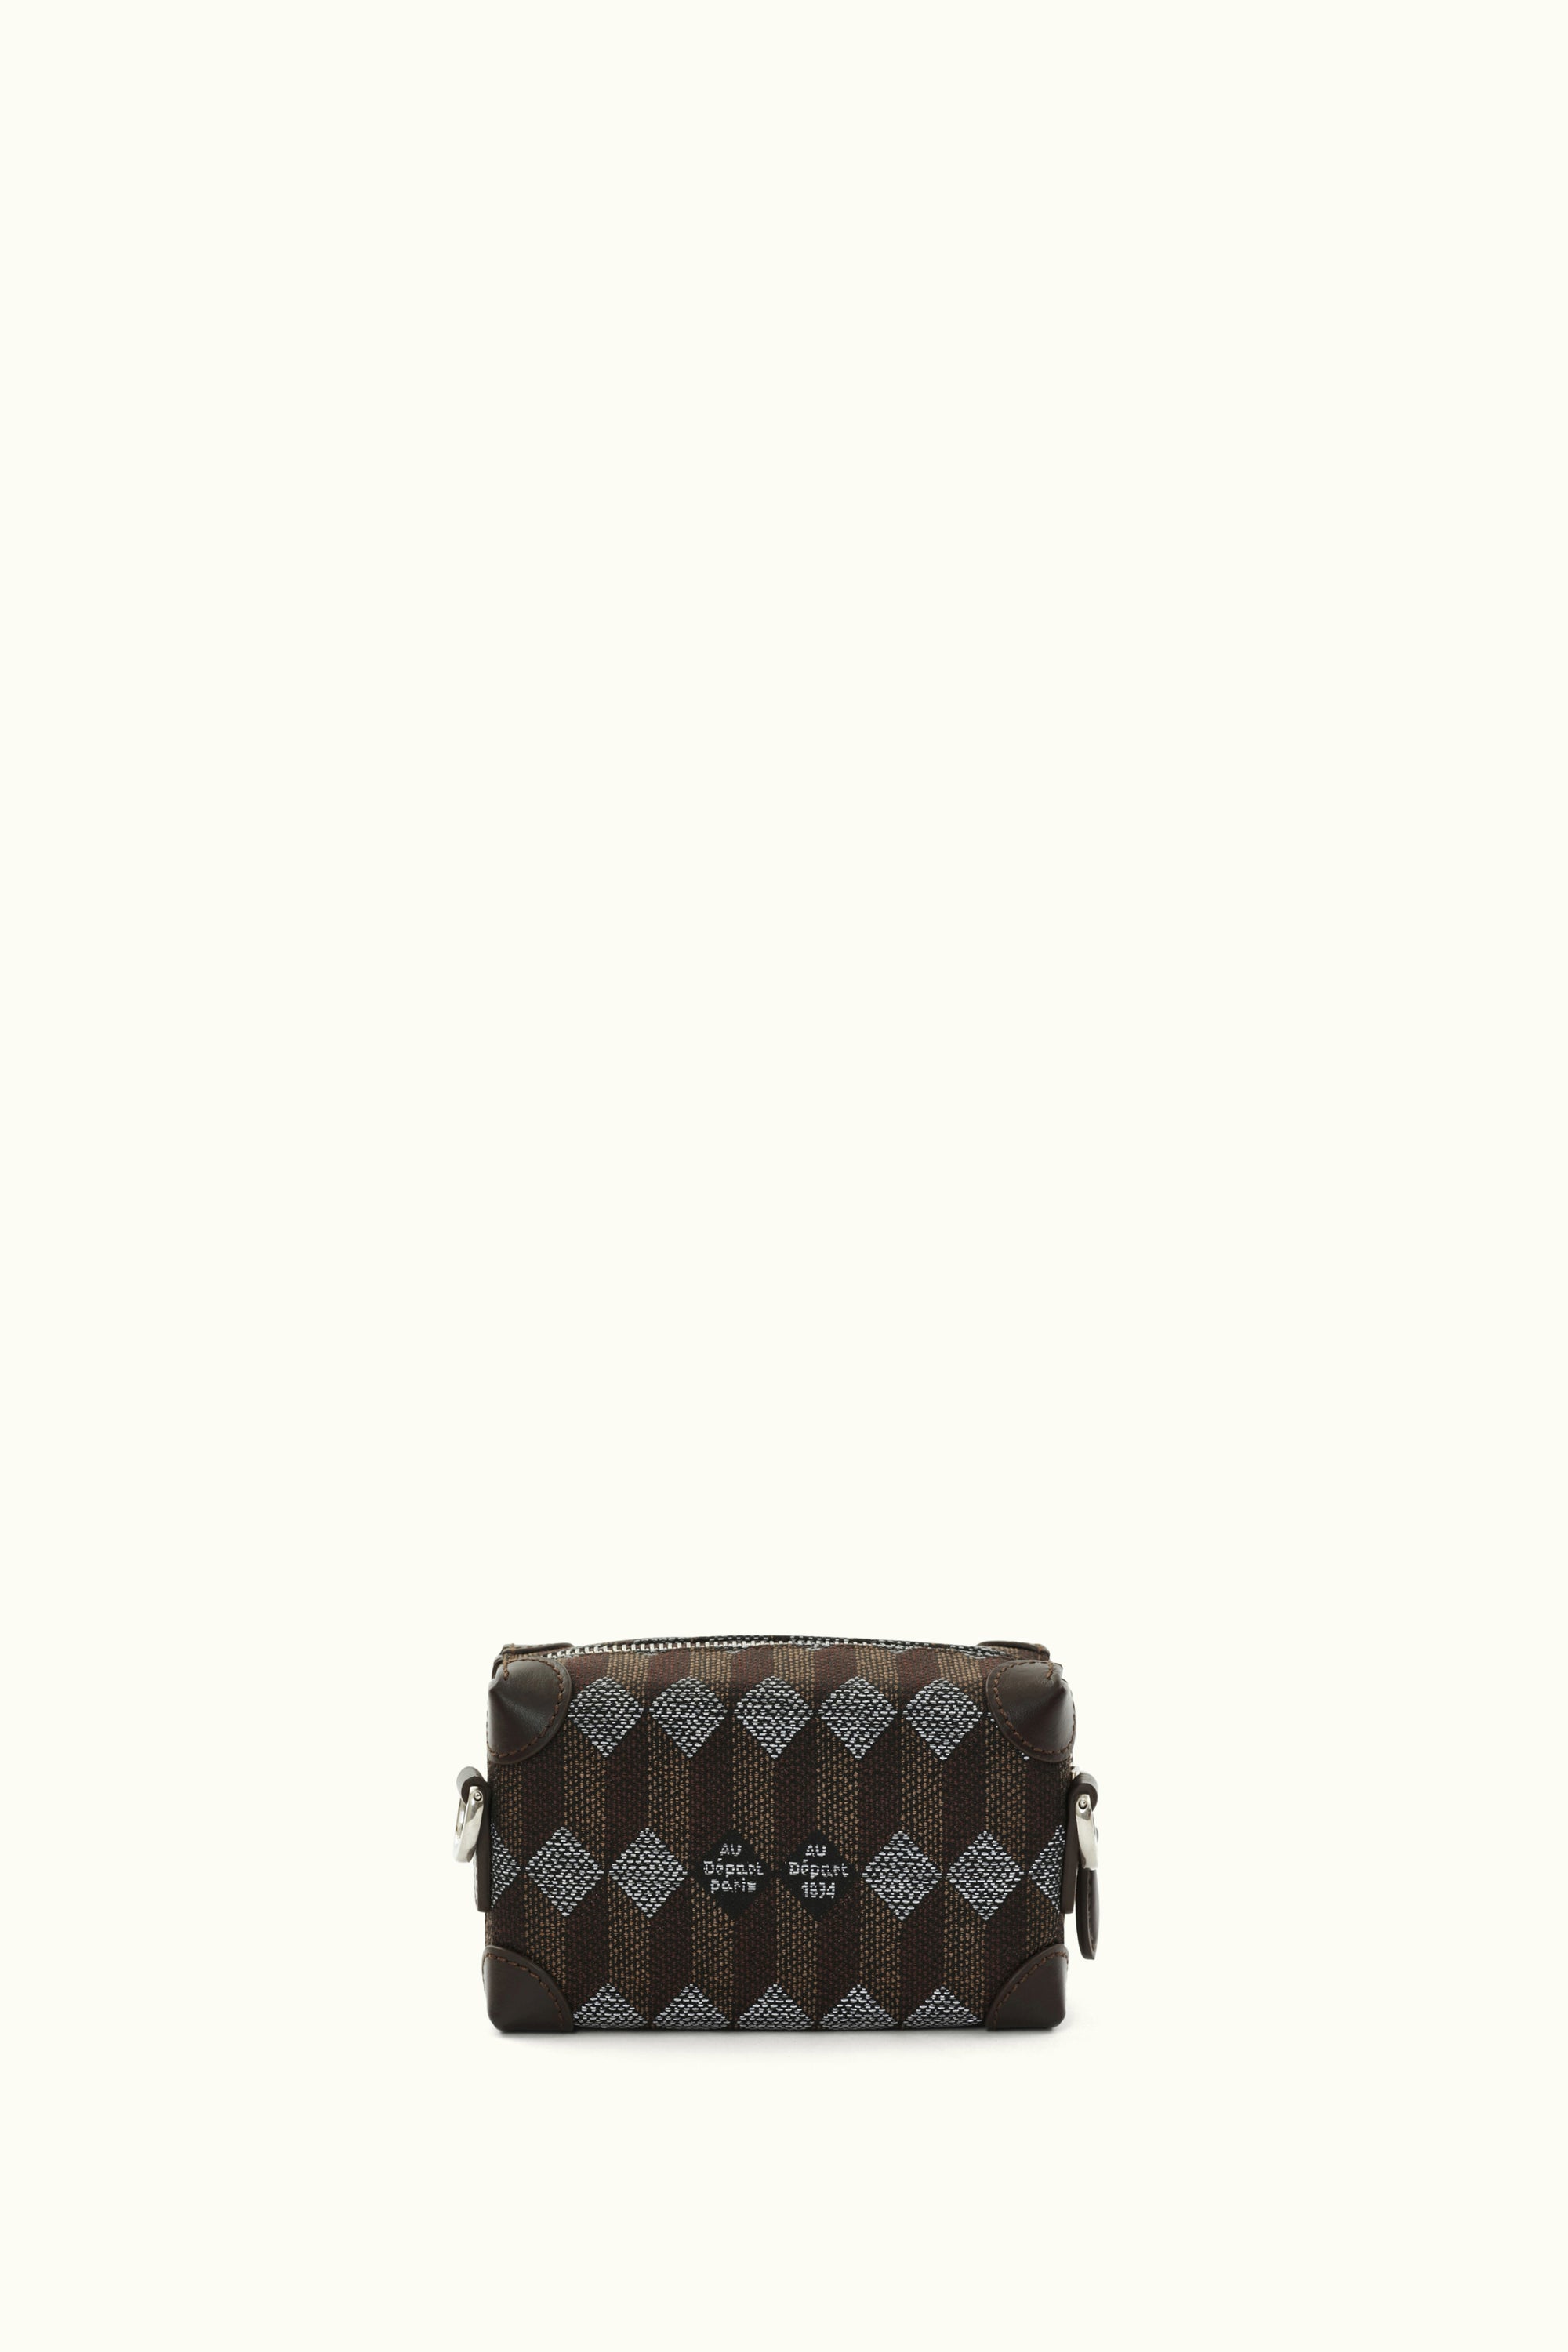 Trunk Soft Mini Bag in Khaki Leather